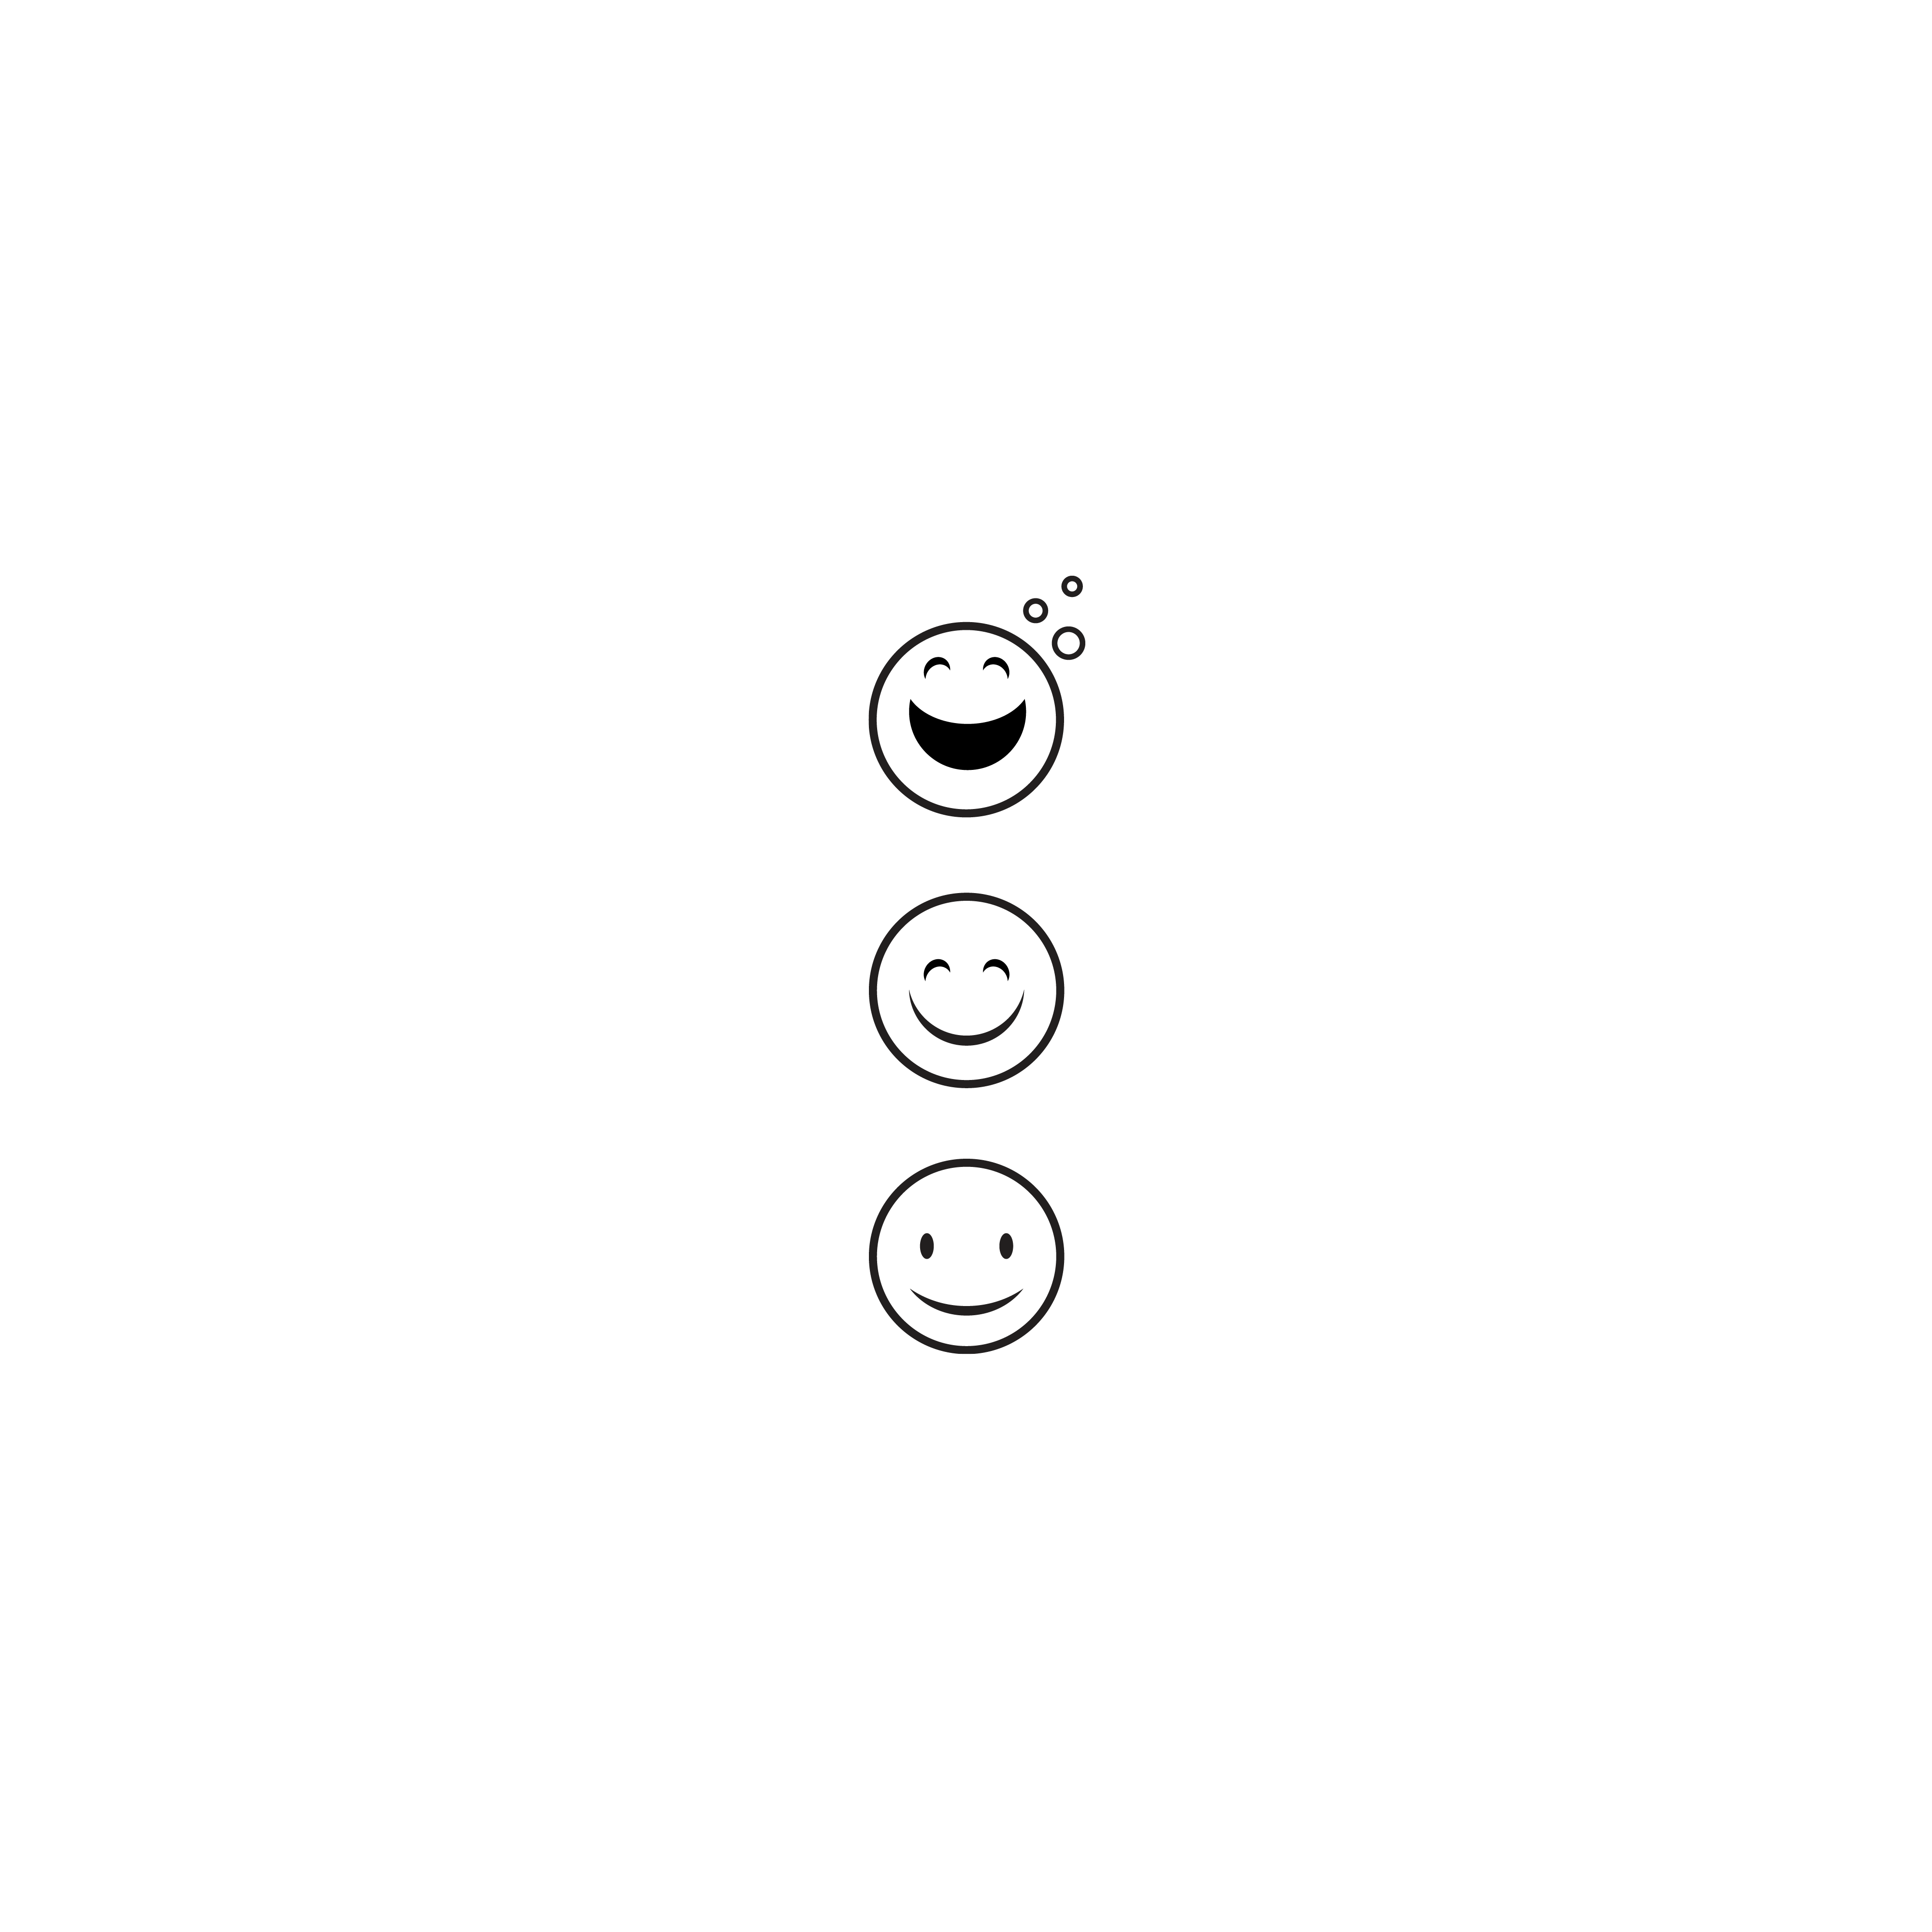 https://mr-picky.com/wp-content/uploads/2020/04/happy-emoji-premium-measuring-wine-glass-closup.png